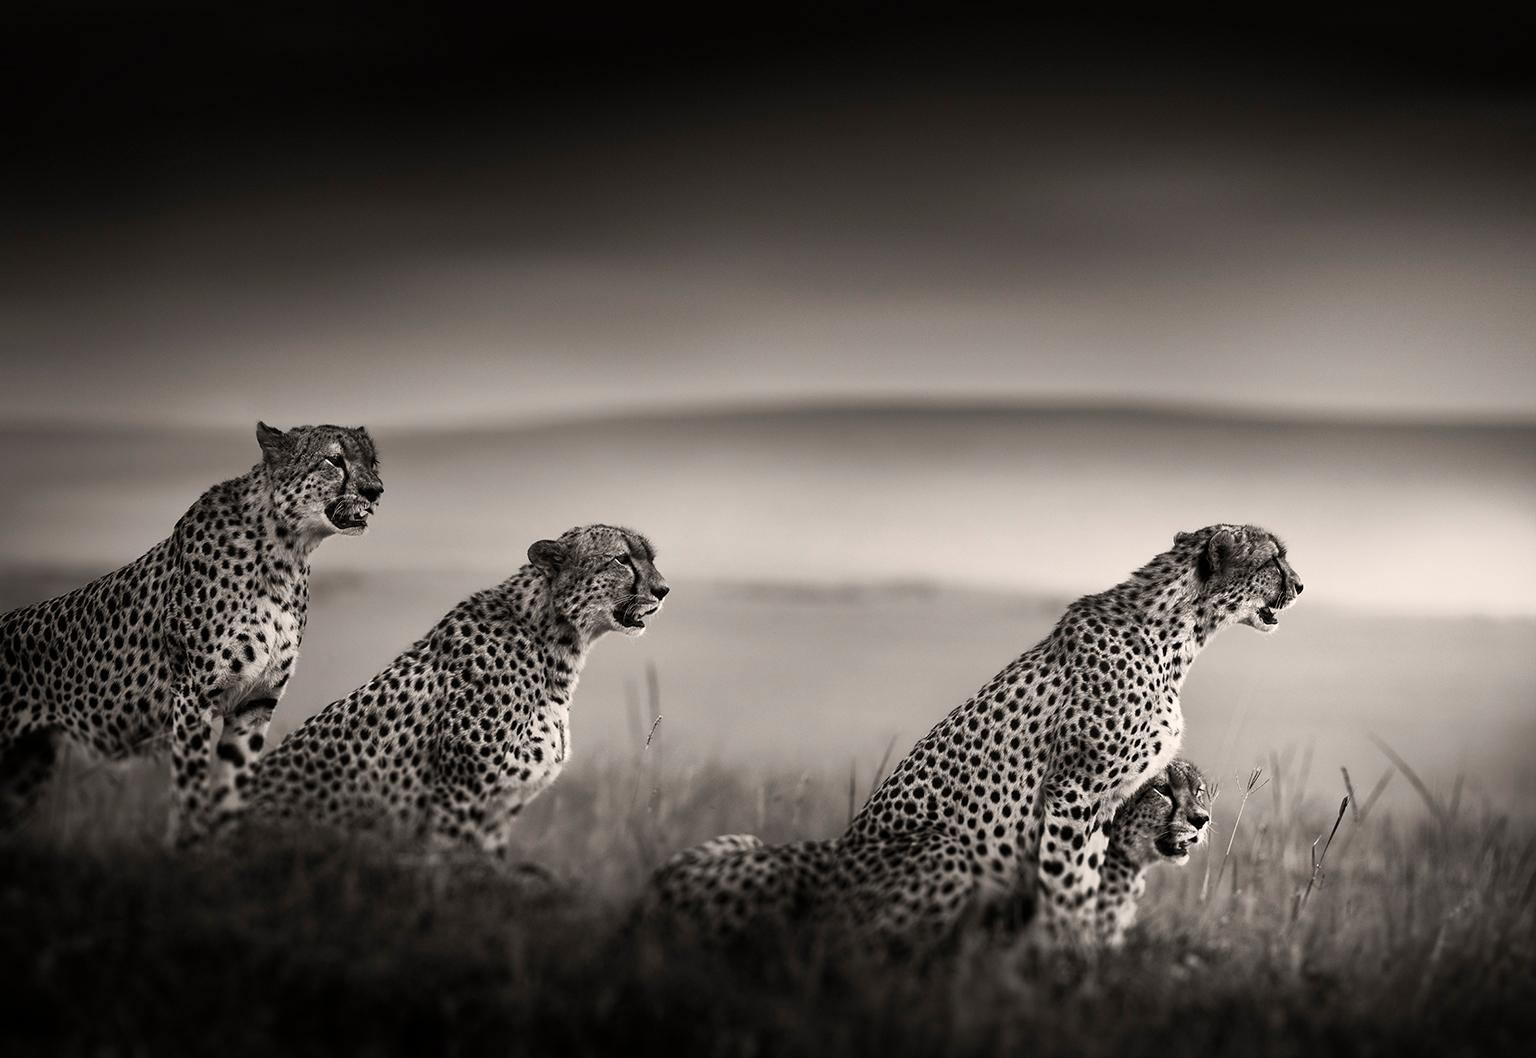 Joachim Schmeisser Portrait Photograph - Tano Bora, Cheetah, black and hwite photography, Africa, Portrait, Wildlife